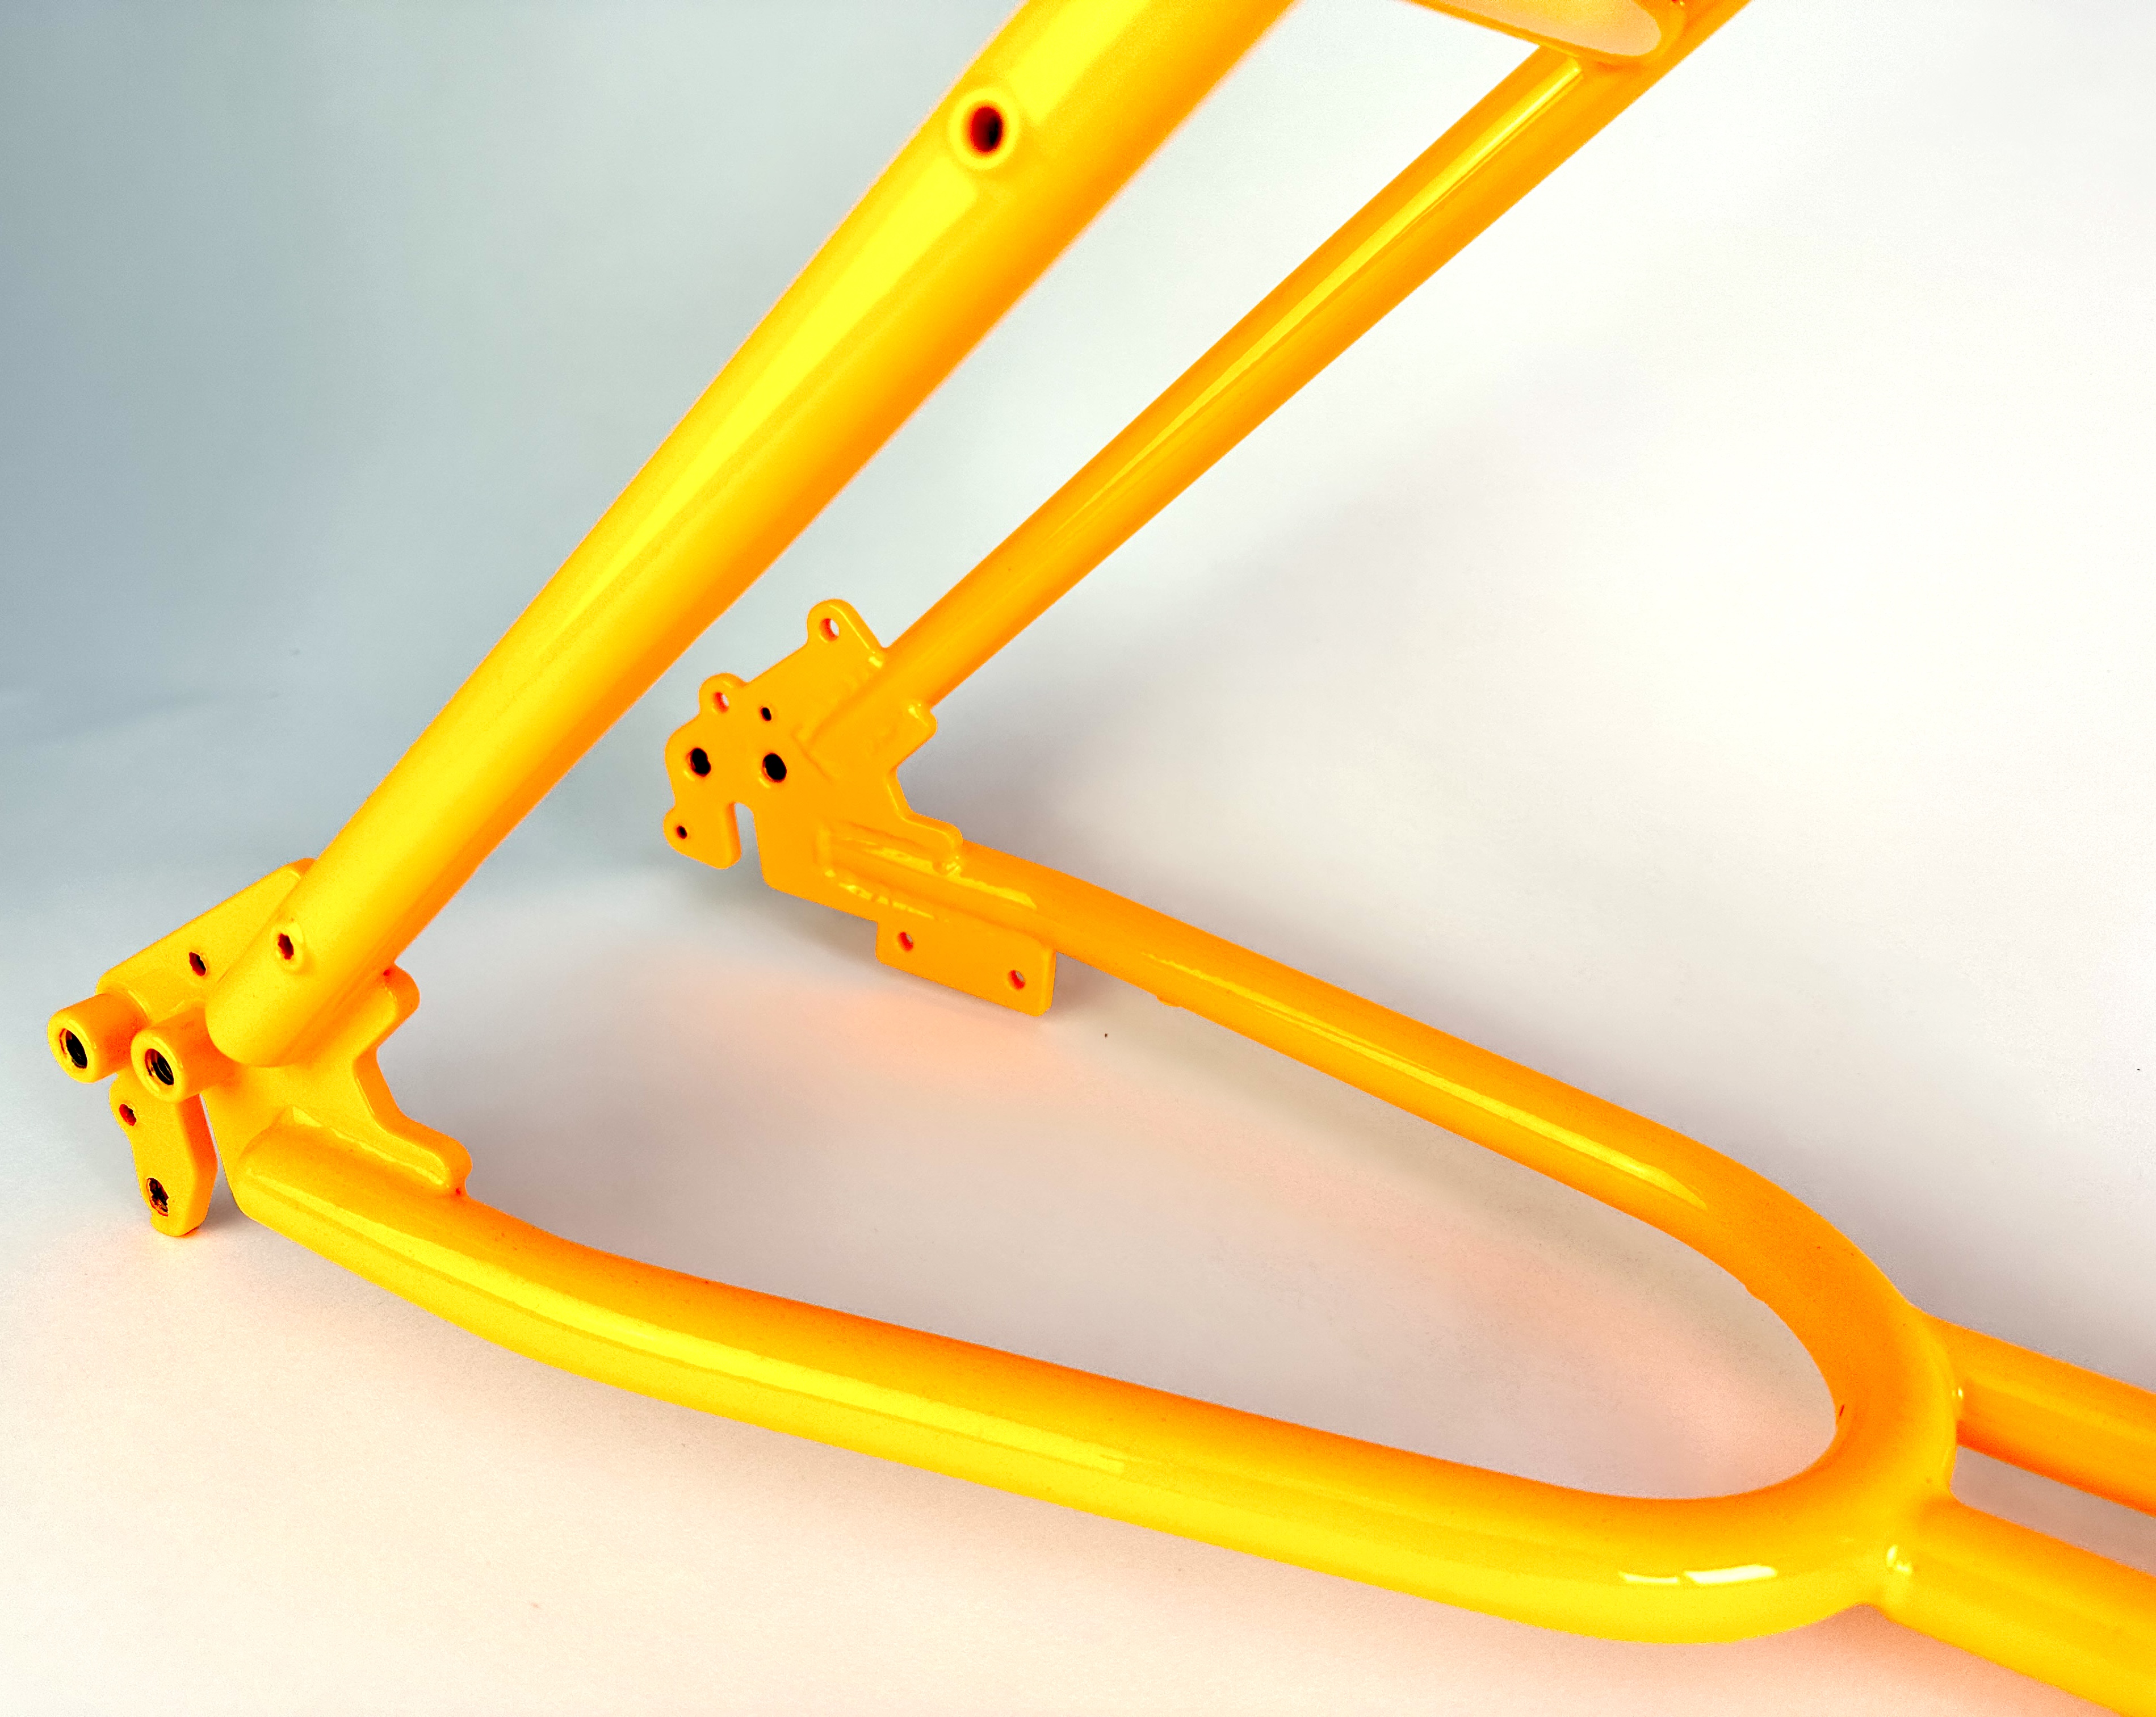 Original UDX hardtail frame, neon-orange